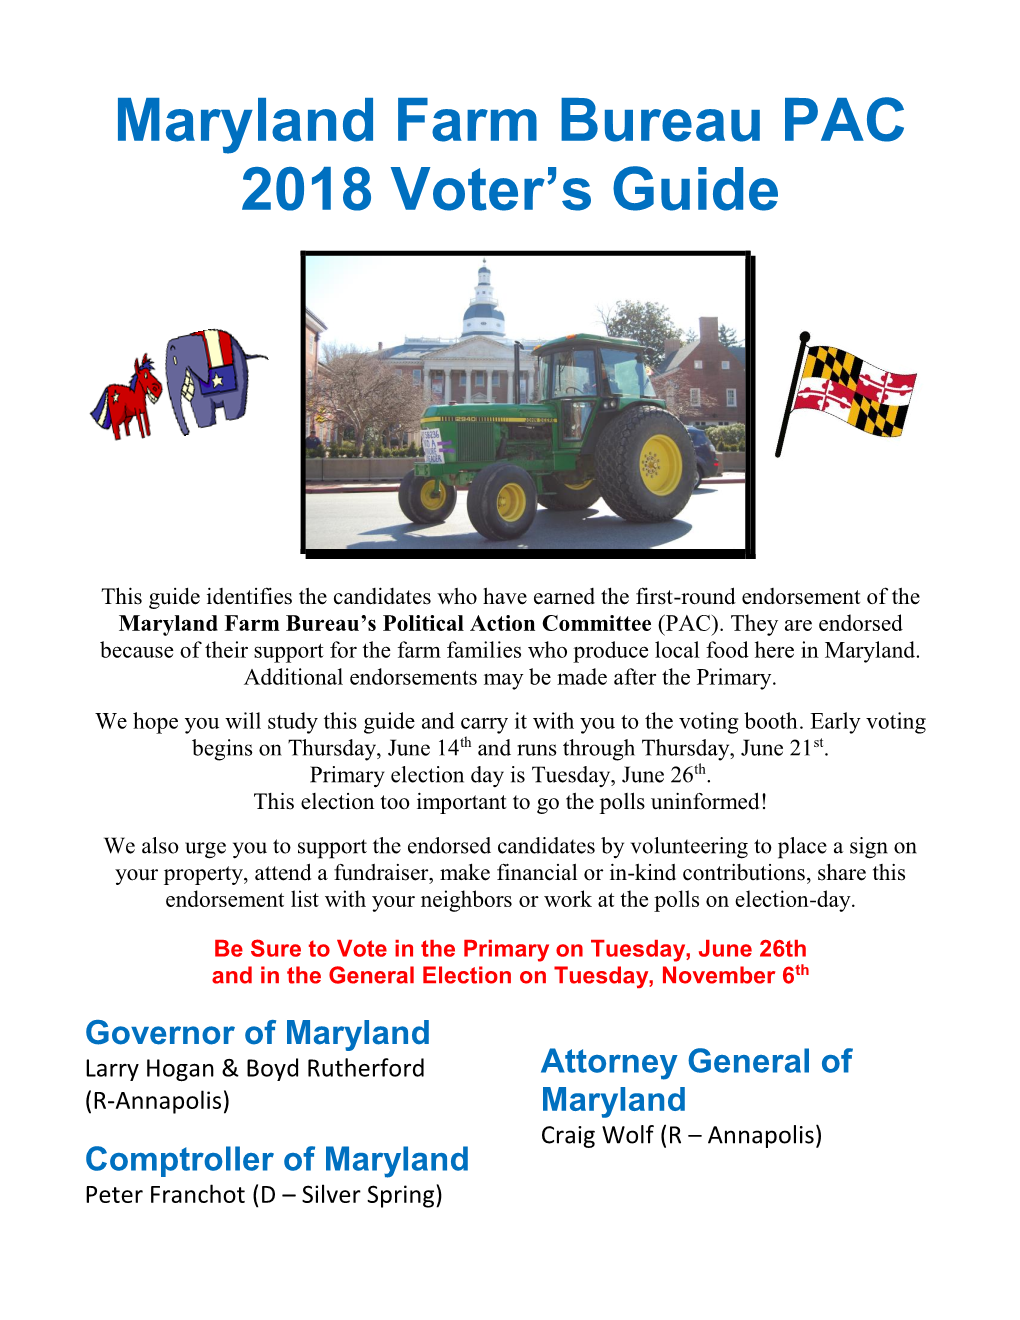 Maryland Farm Bureau PAC 2018 Voter's Guide